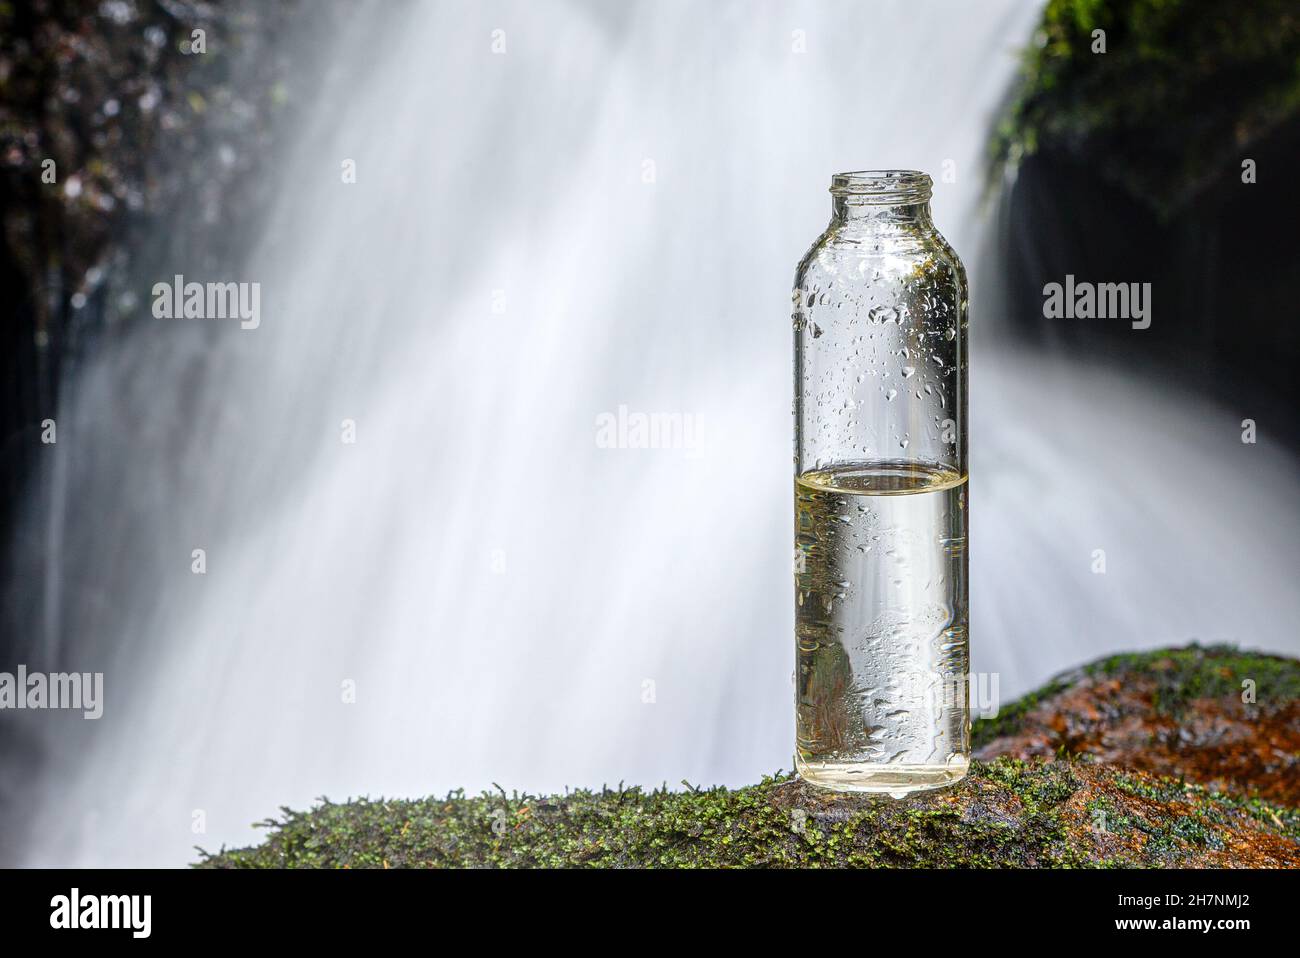 Agua mineral de 2 litros fotografías e imágenes de alta resolución - Alamy